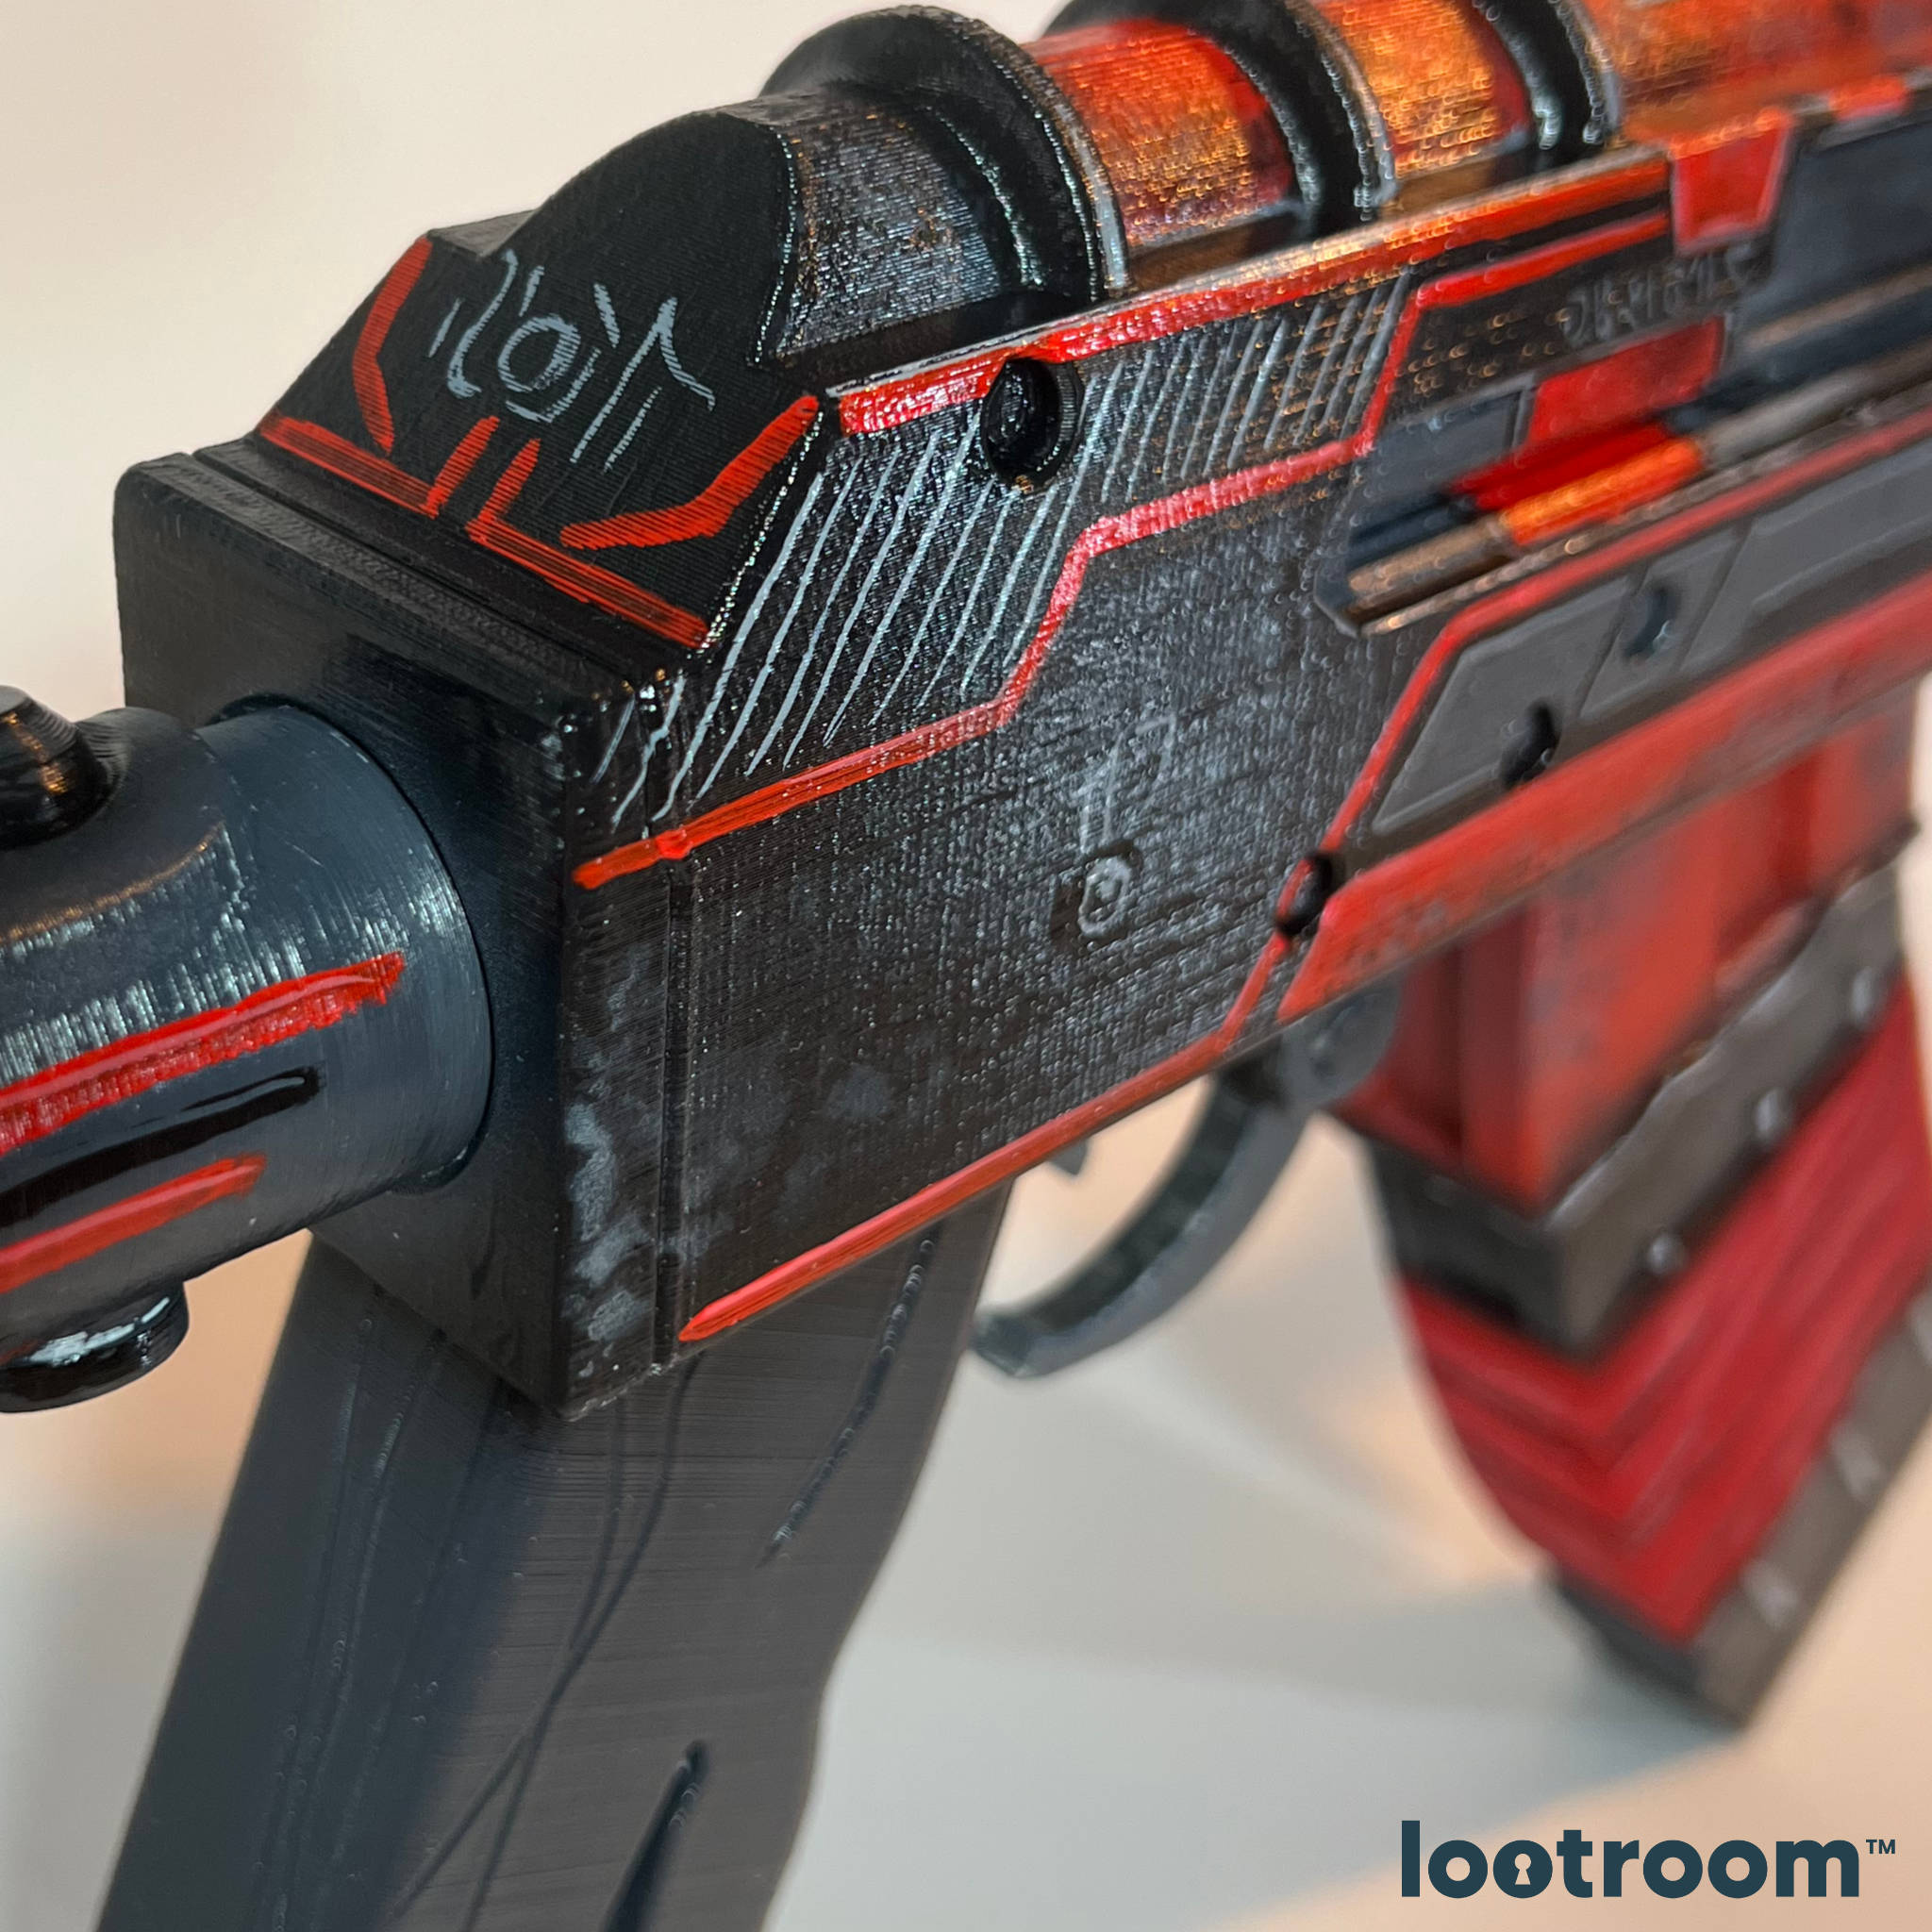 rust lifesize assault rifle ar ak alien red skin prop cosplay